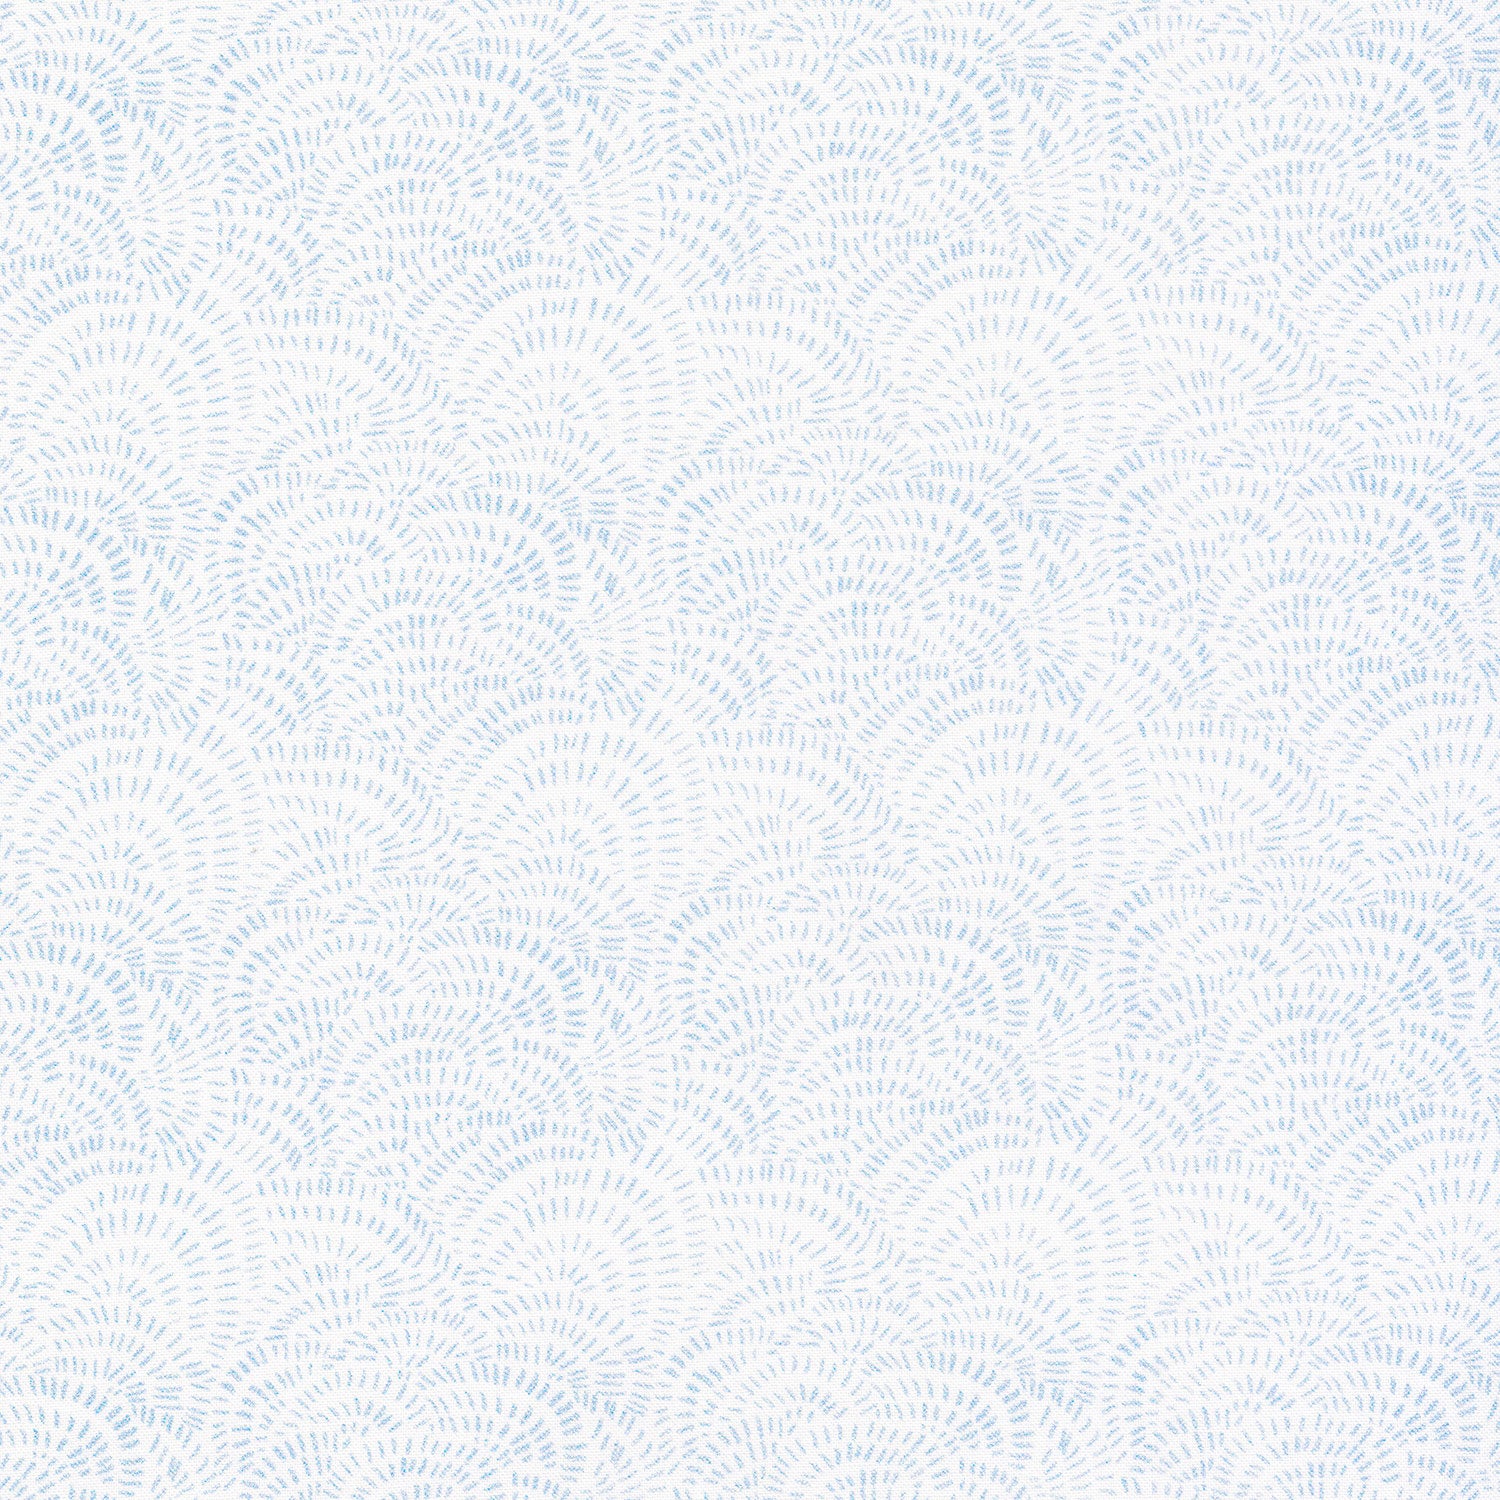 HeatnBond Fusible Fleece Pack, White 22 in x 1 yd